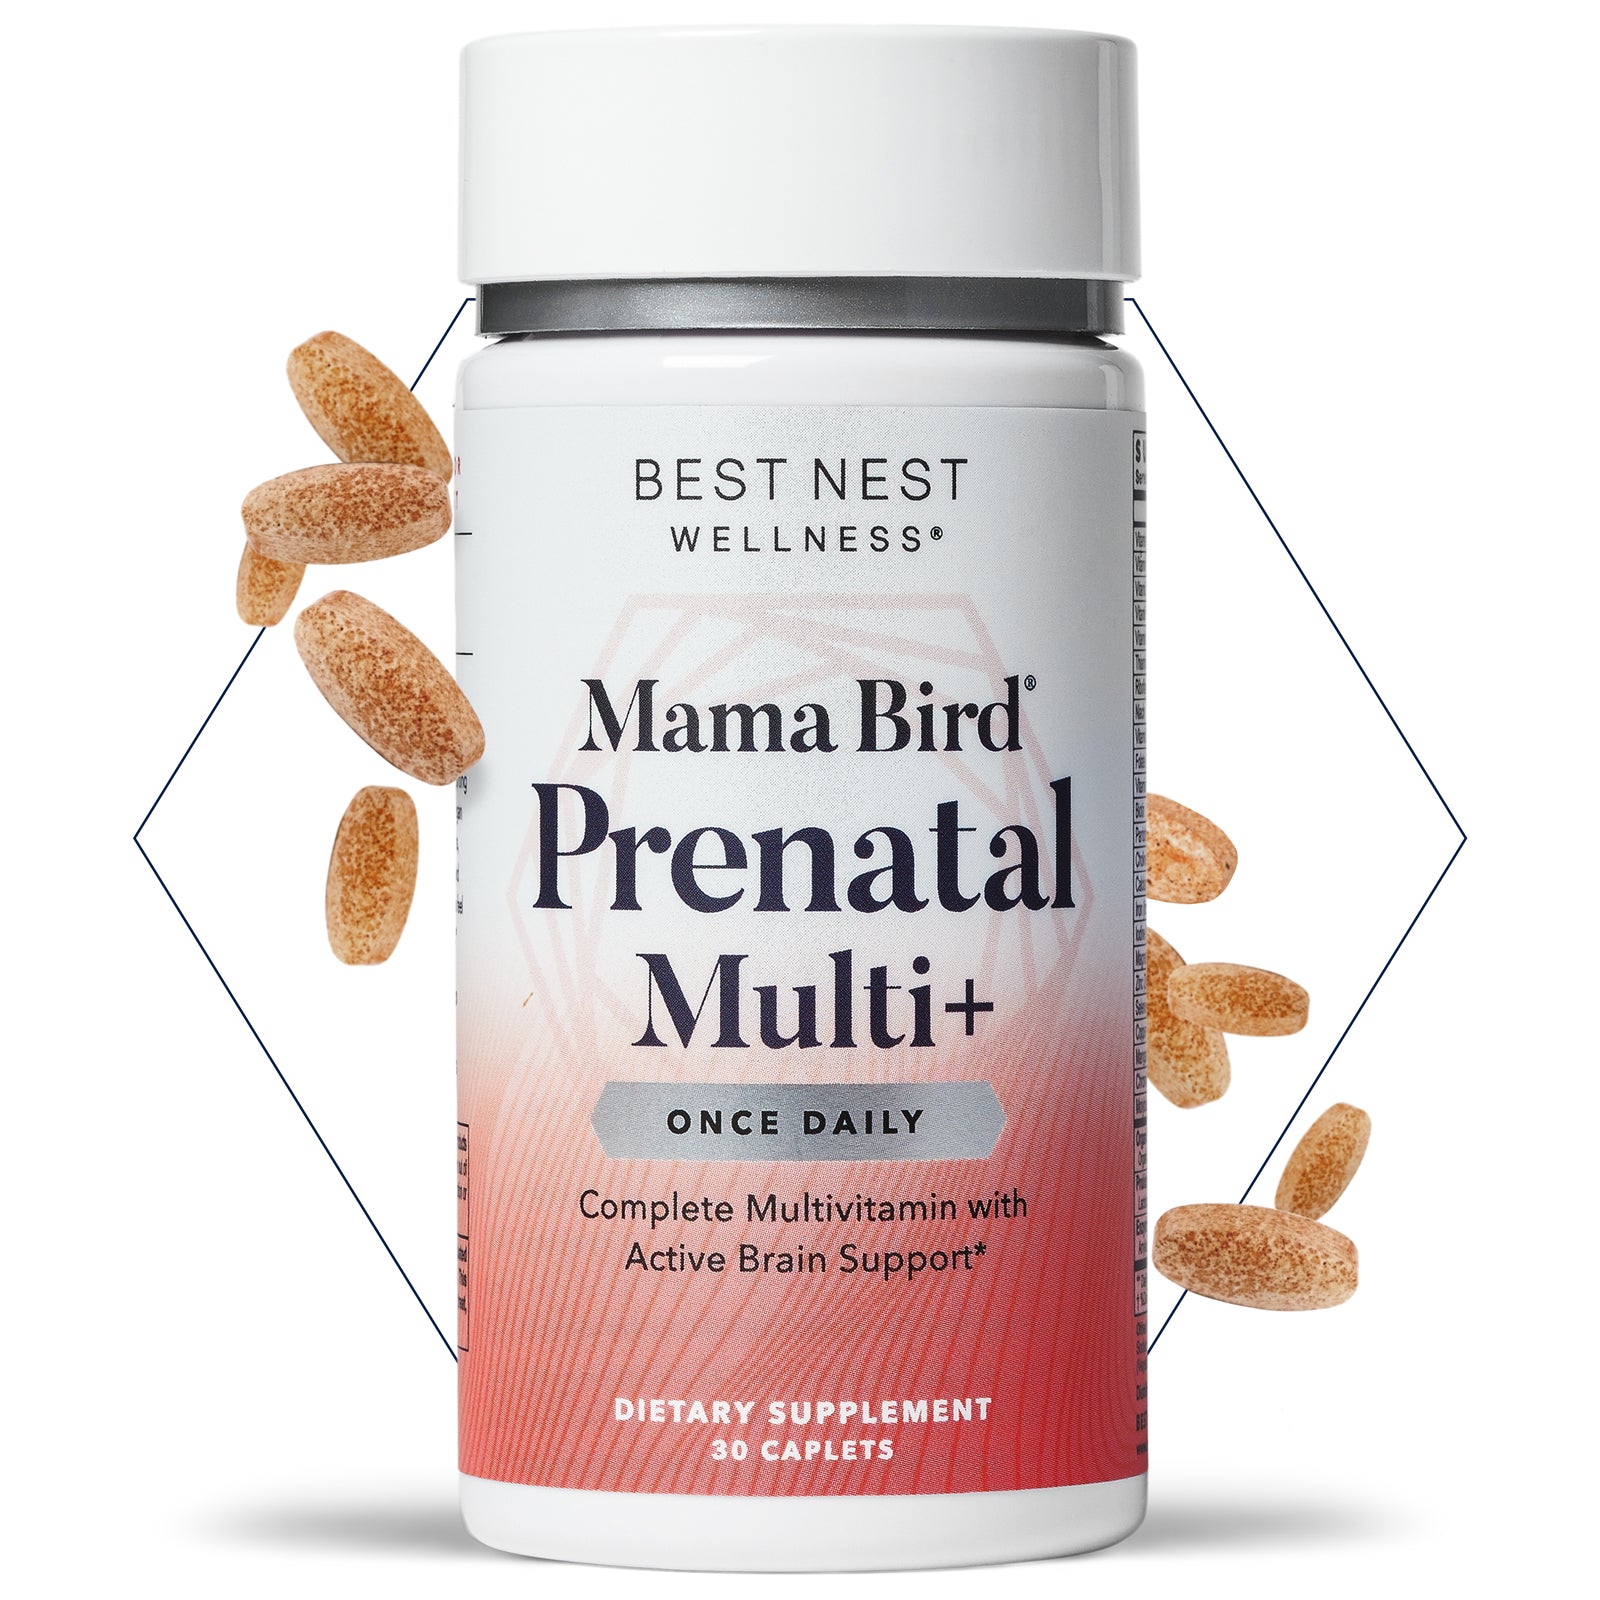 Mama Bird Prenatal Multi+ bottle with pills for baby's brain and neurodevelopment.